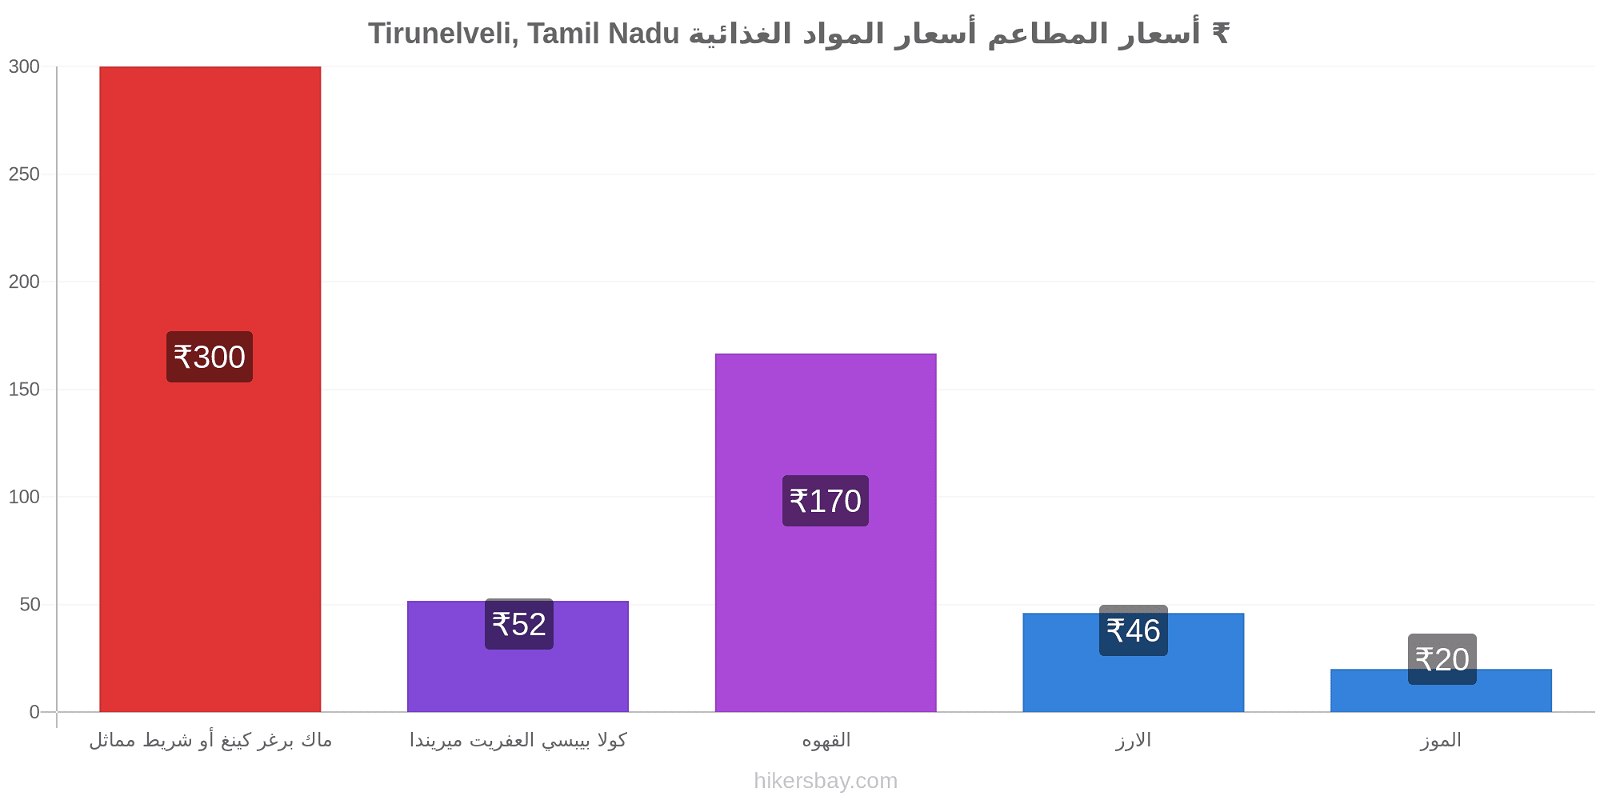 Tirunelveli, Tamil Nadu تغييرات الأسعار hikersbay.com